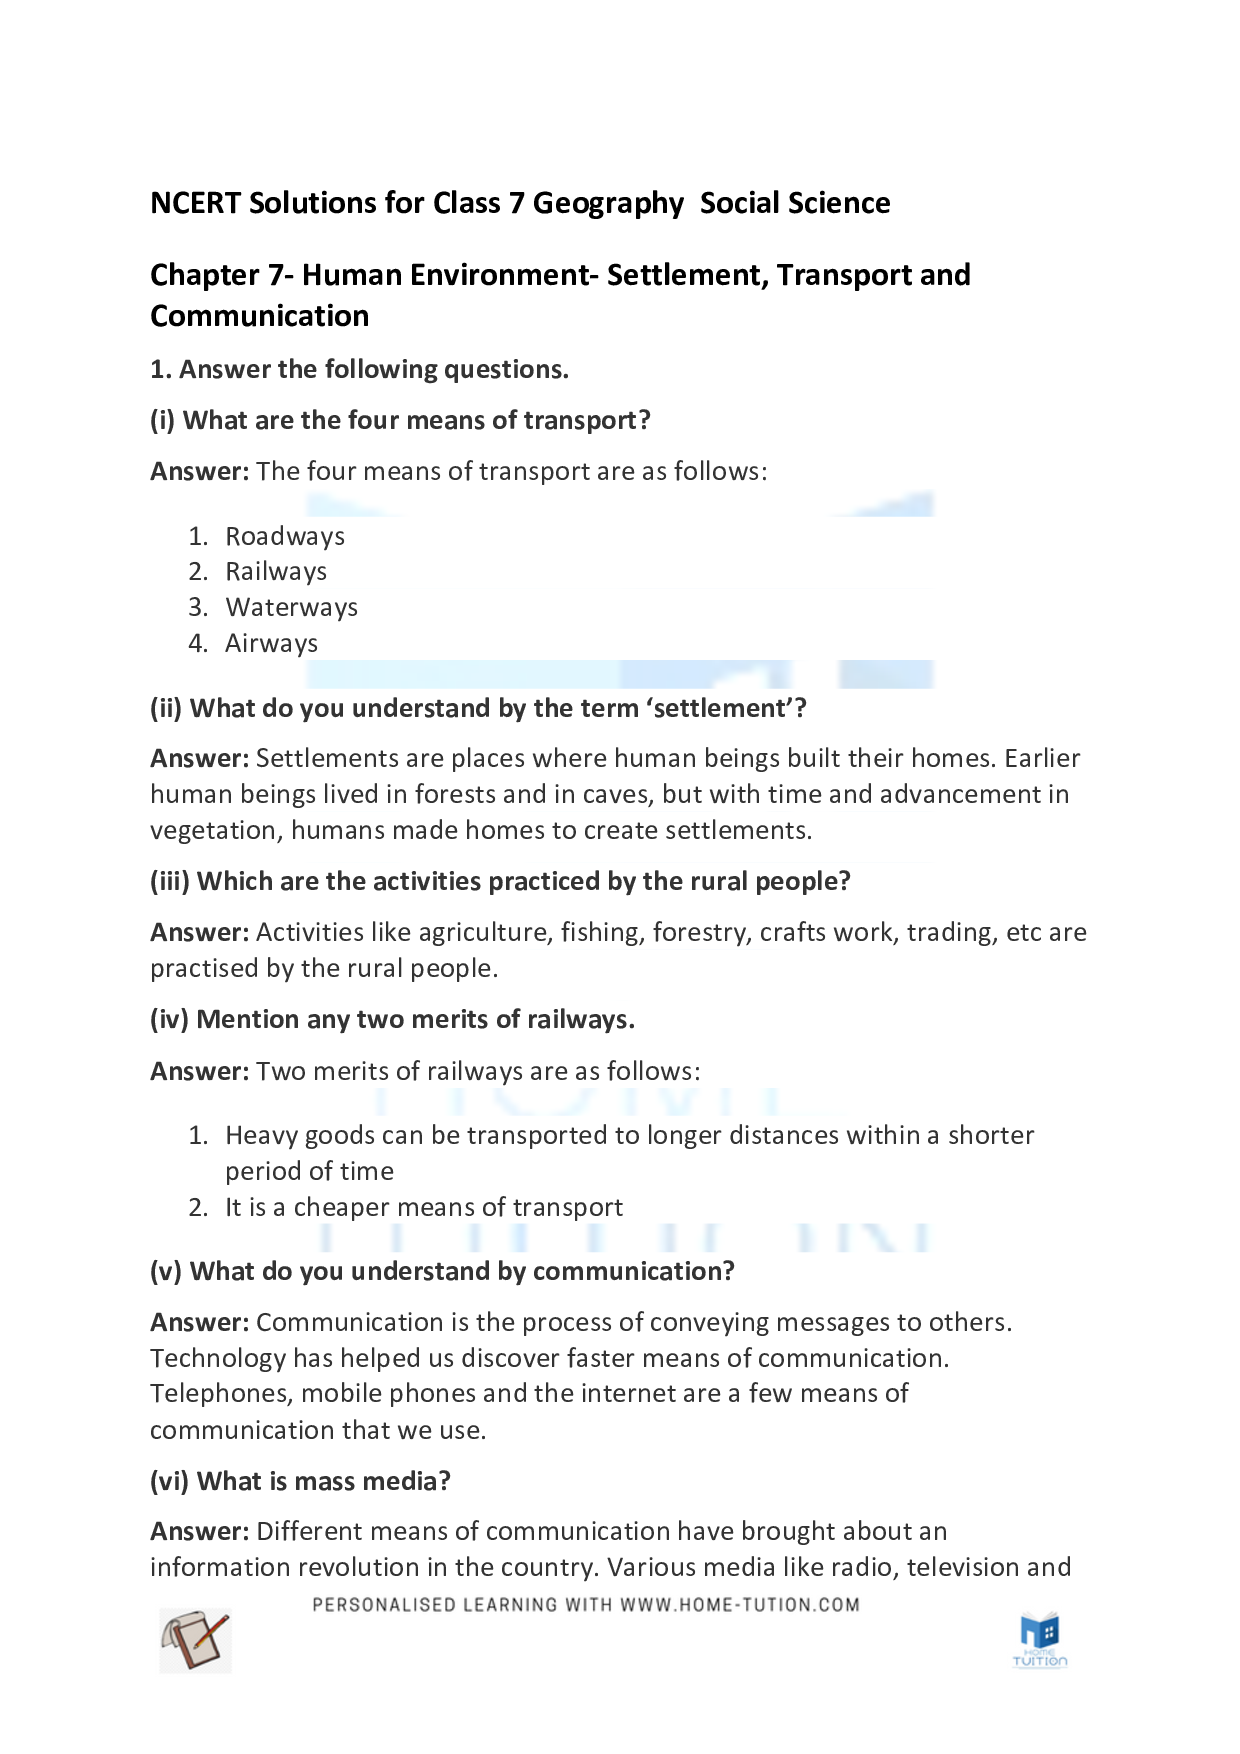 Chapter 7 Human-Environment – Settlement, Transport and Communication